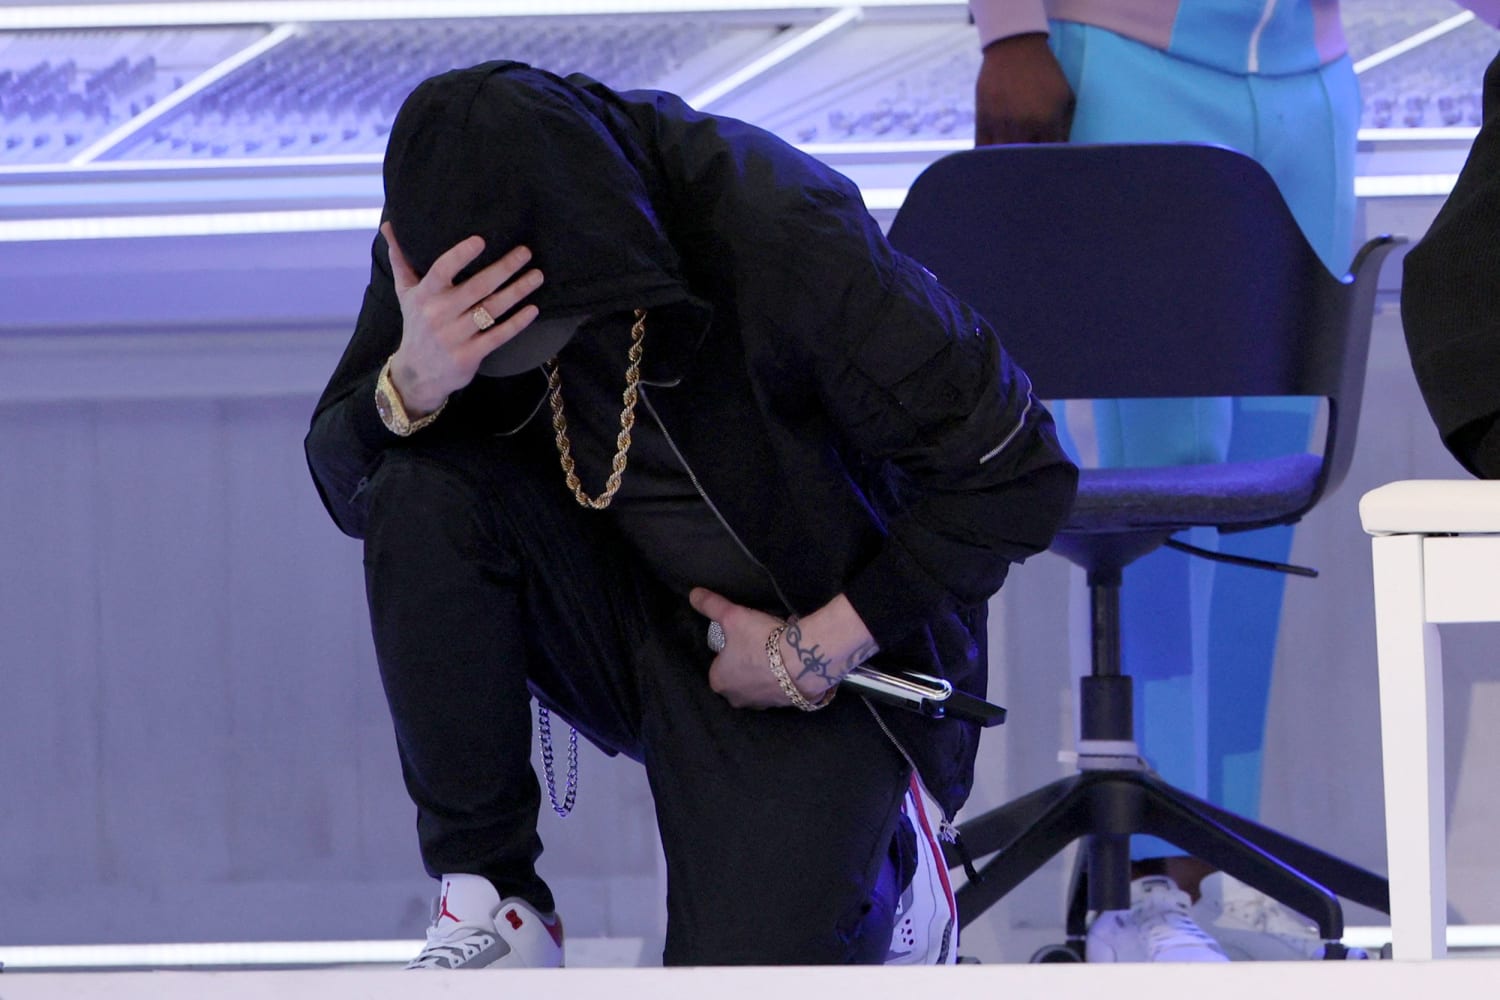 Catch Eminem in New Trailer for Pepsi Super Bowl LVI Halftime Show